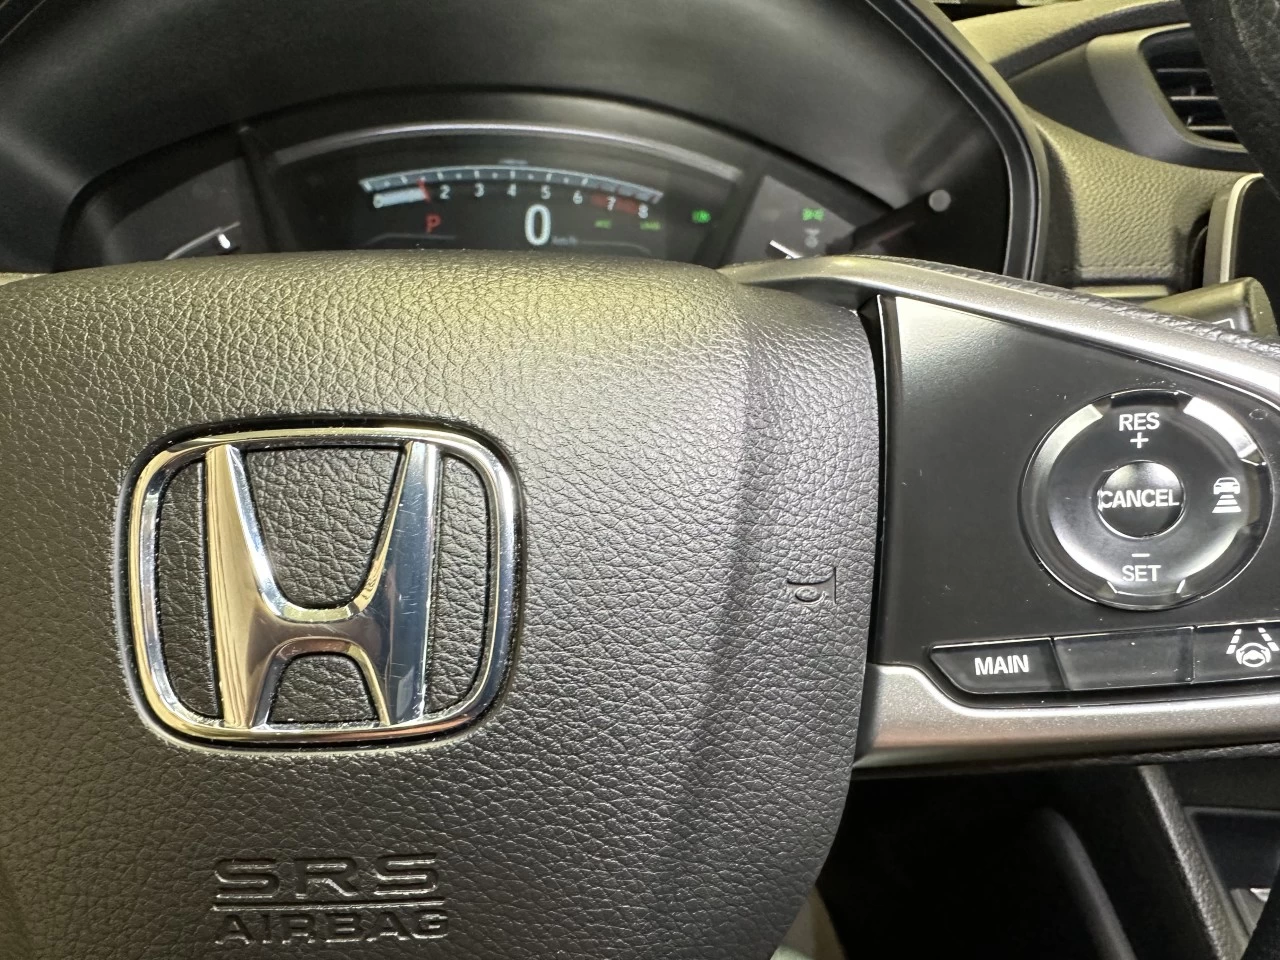 2021 Honda CR-V LX https://www.lombardihonda.com/resize/b990ff35b810a3abc0cc817b2ca24889-1